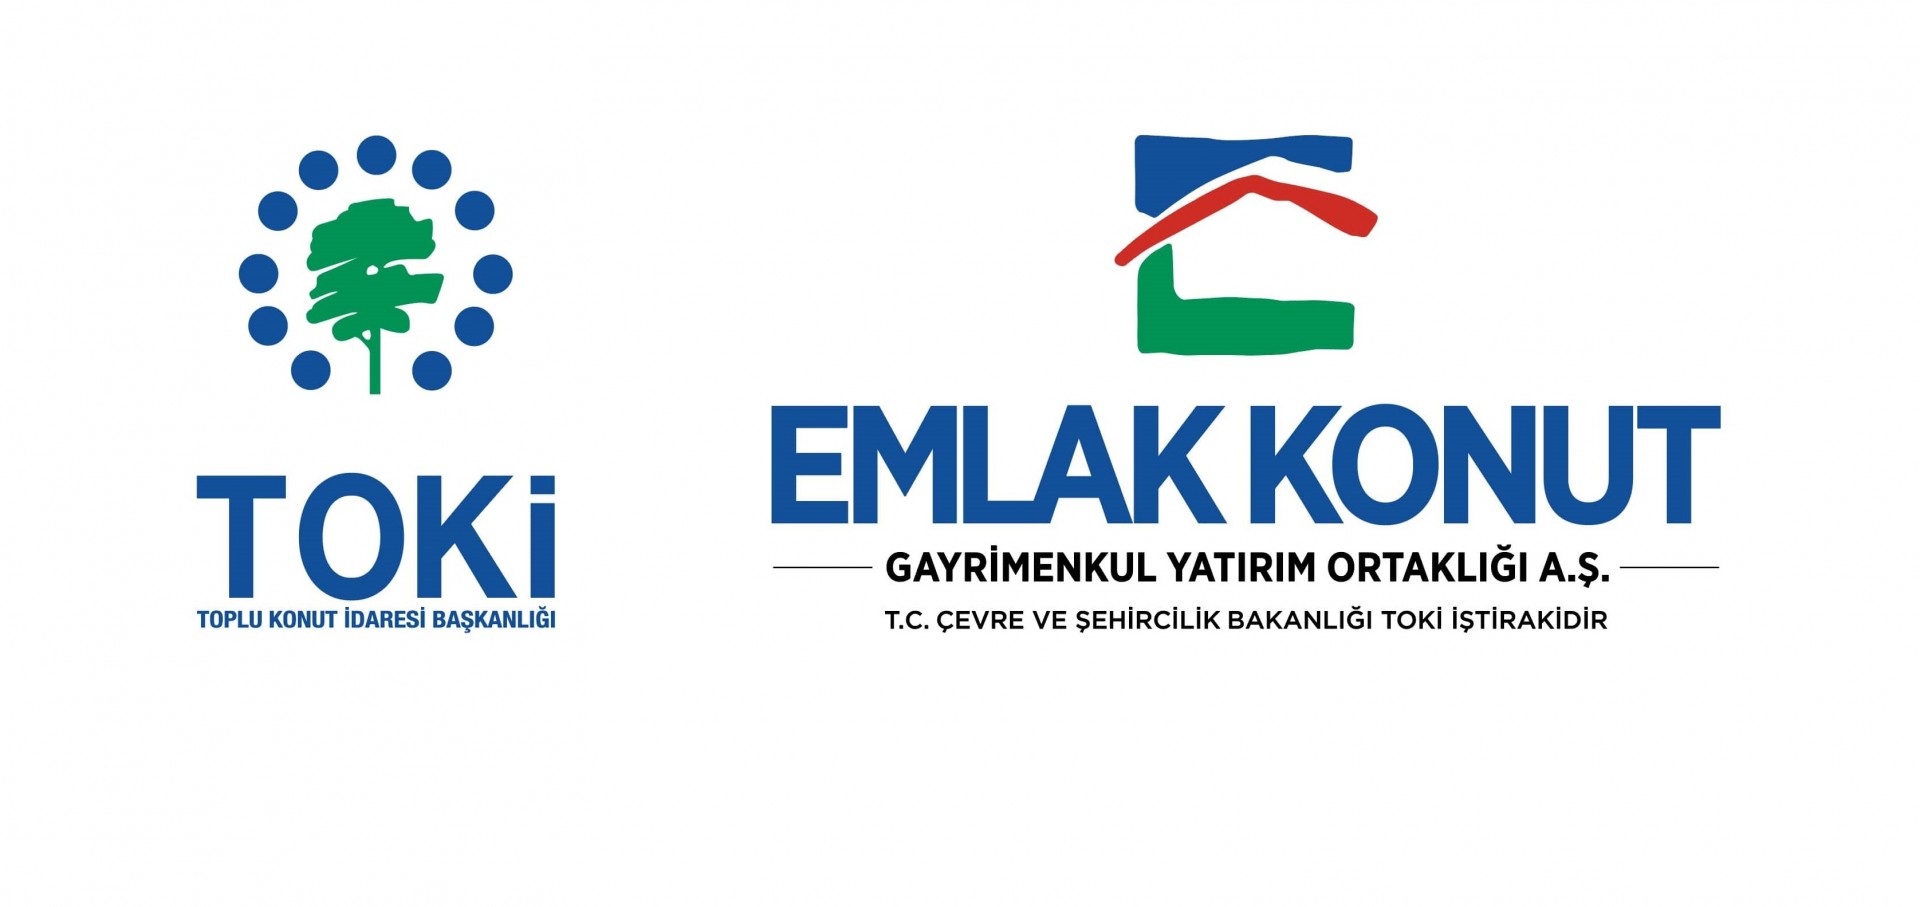 TOKI and Emlak Konut - Turkey's major construction companies